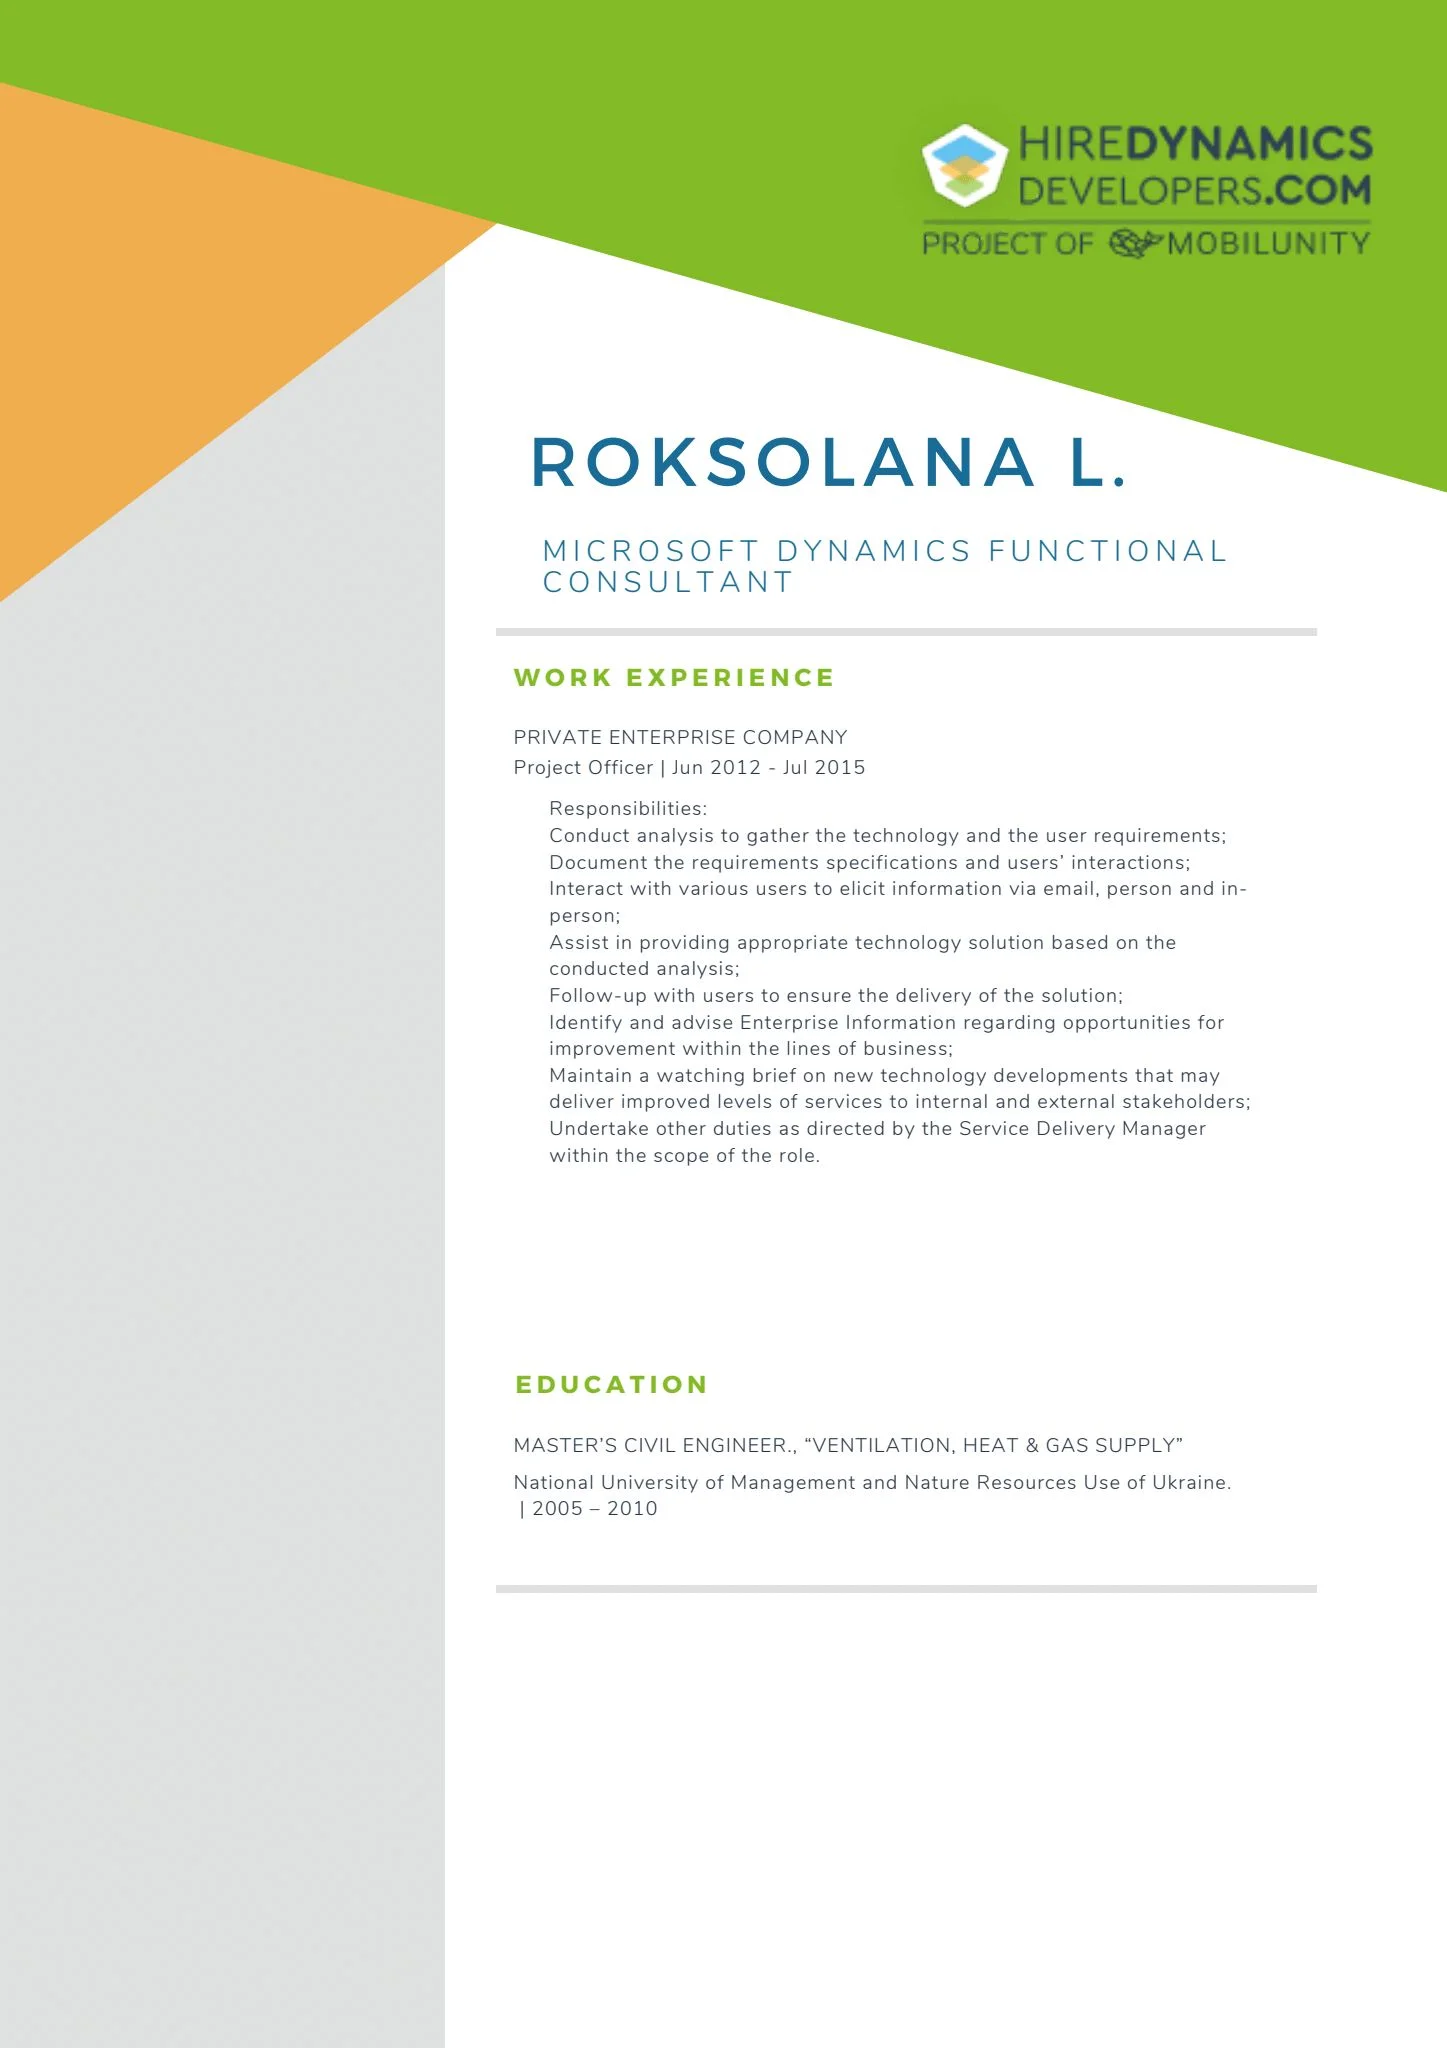 Roksolana L. – Microsoft Dynamics Functional Consultant